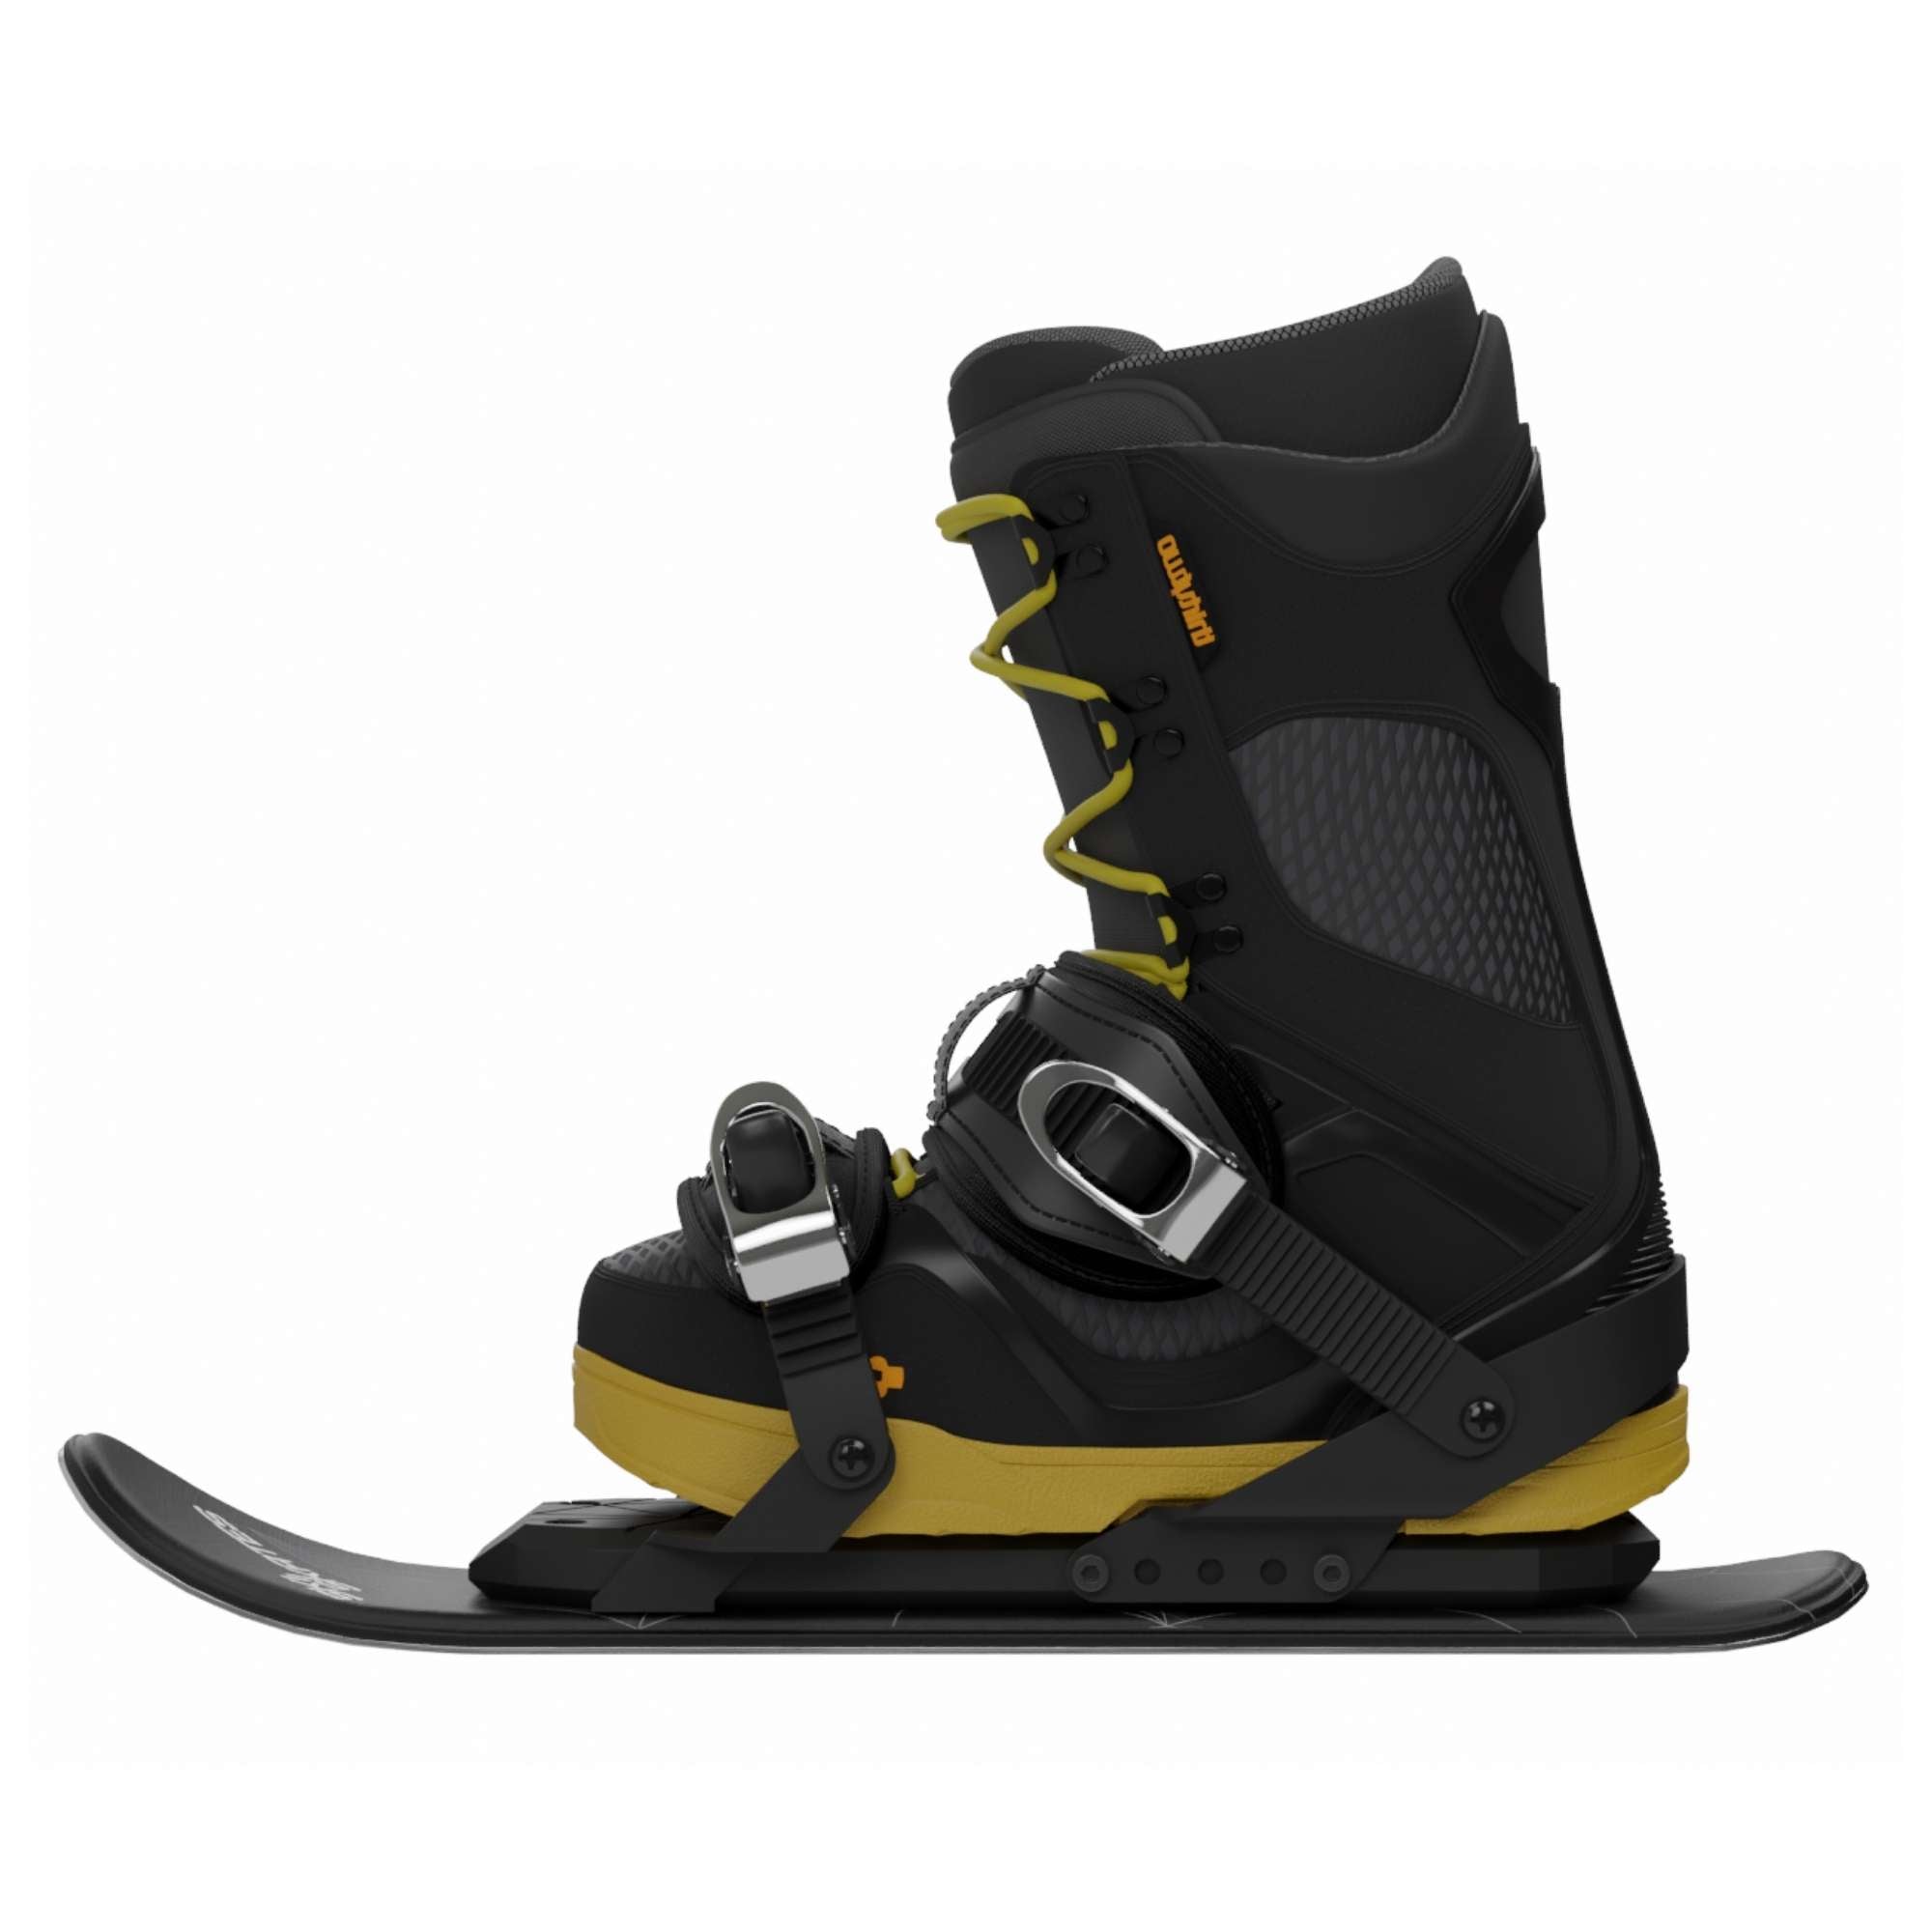 Porte-skis (5 paires) / Porte-Snowboard MINI - Accessoires MINI